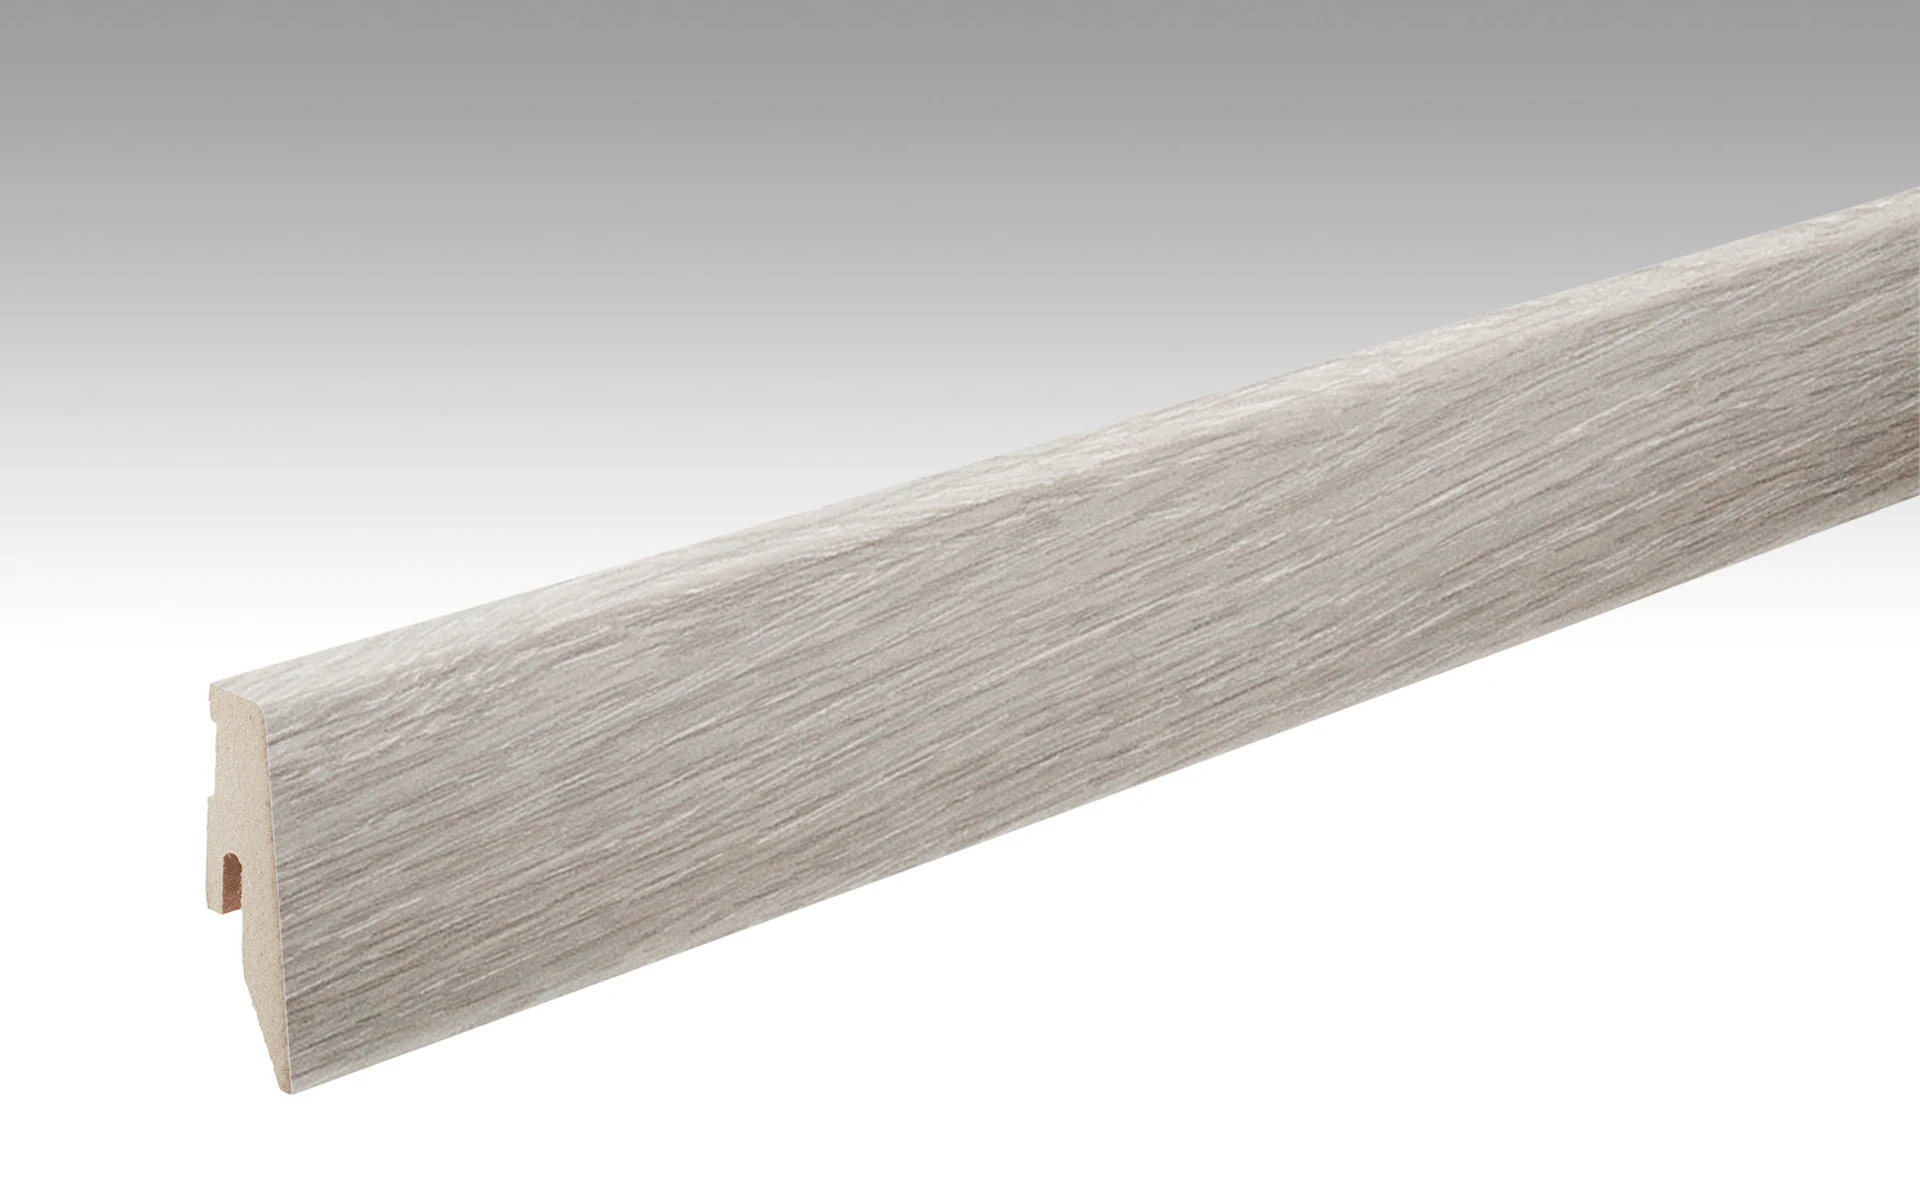 Battiscopa MEISTER rovere bianco lisciviato 6181 - 2380 x 60 x 20 mm (200005-2380-06181)